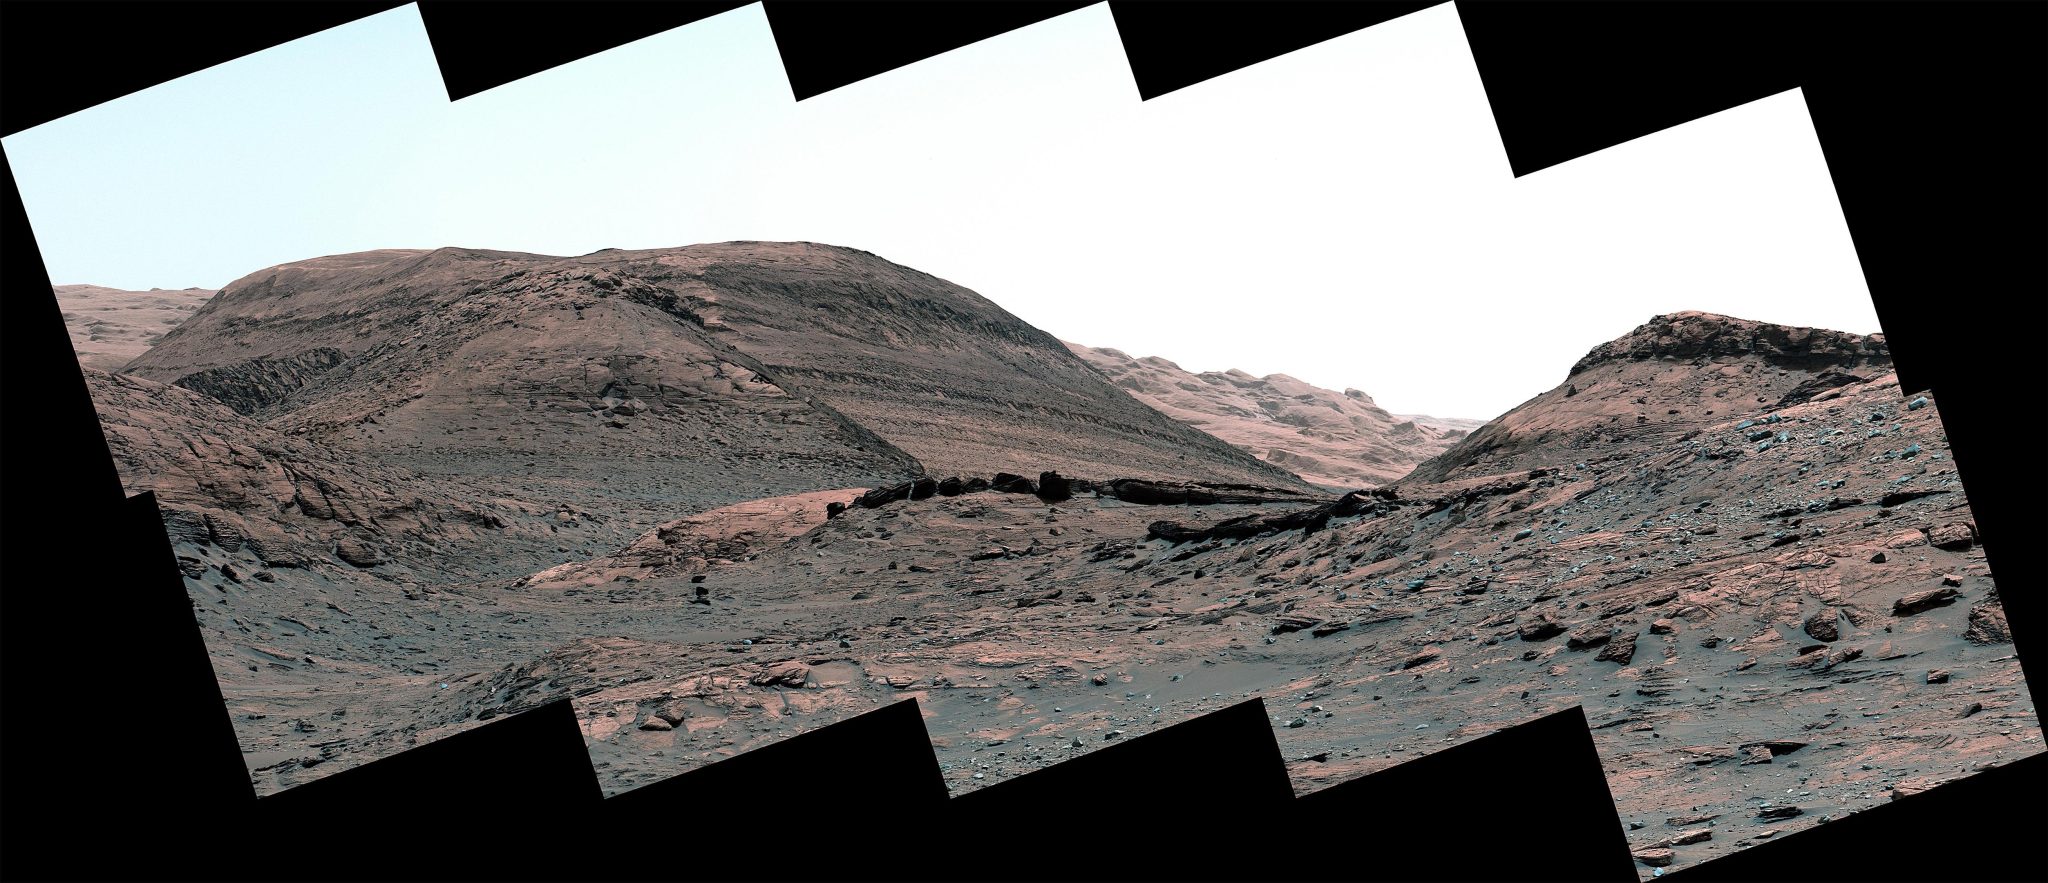 Curiosity Mars Rover Sulfate Bearing Region